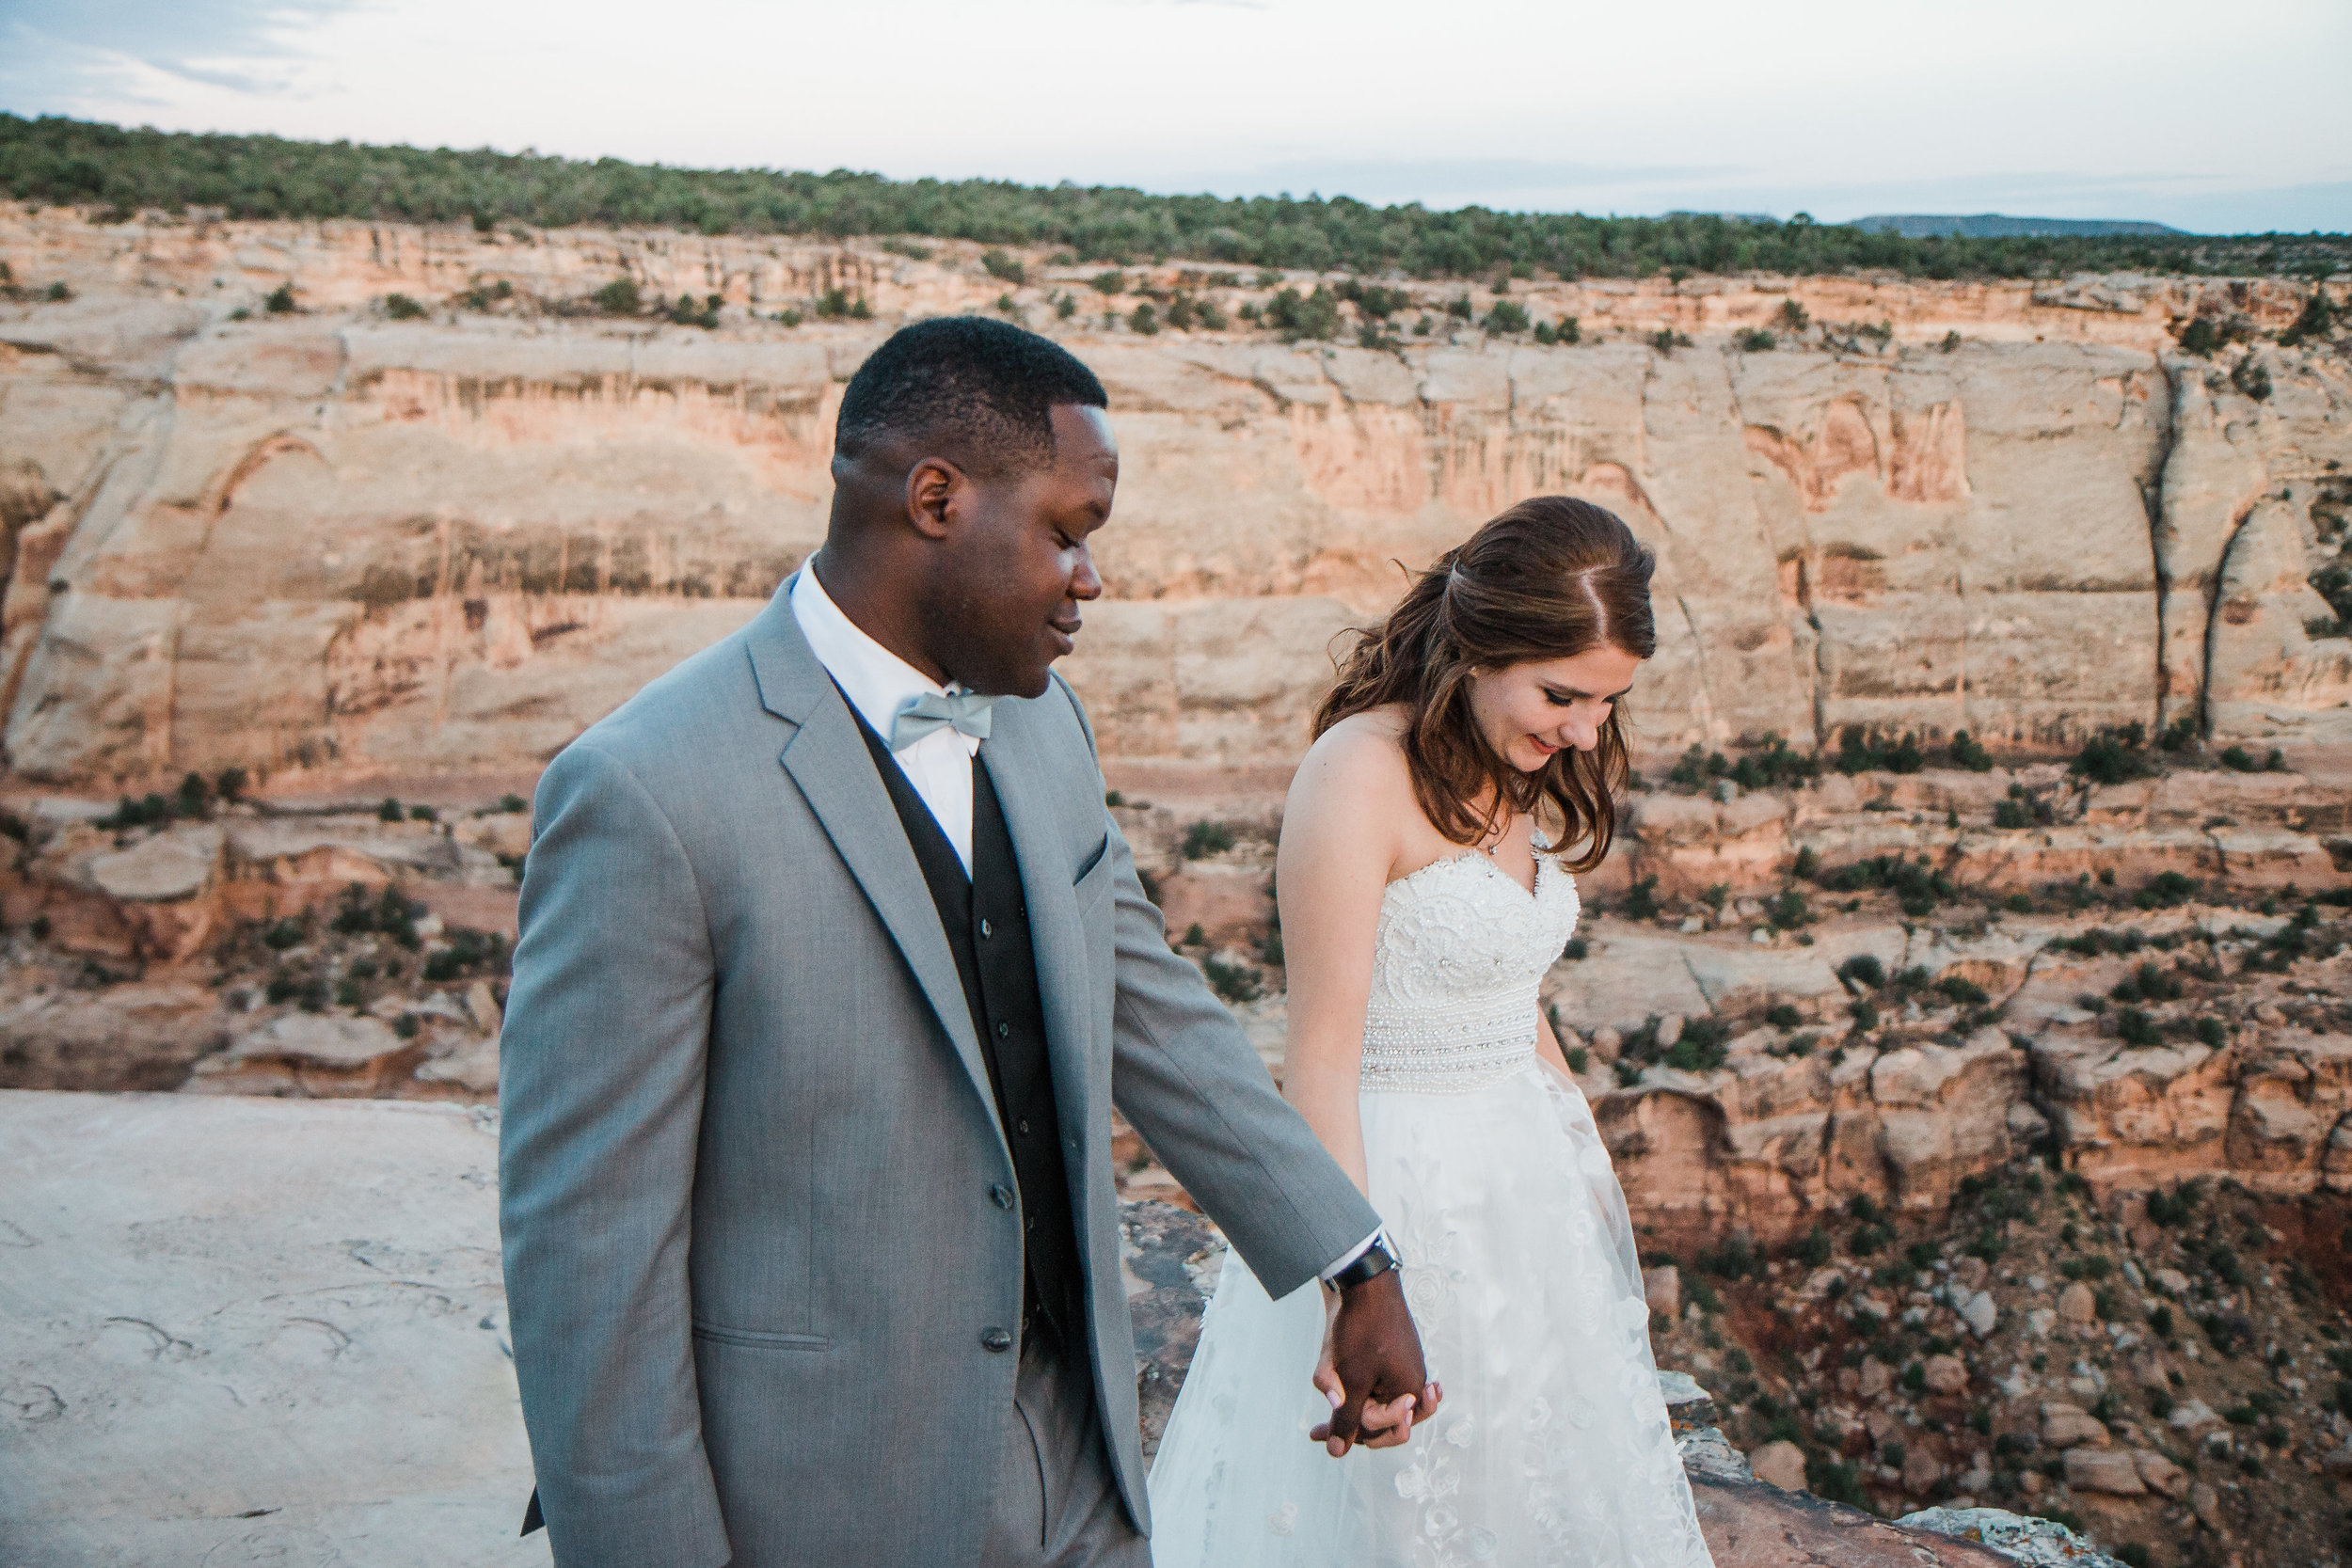 Adventure wedding photographers in Colorado